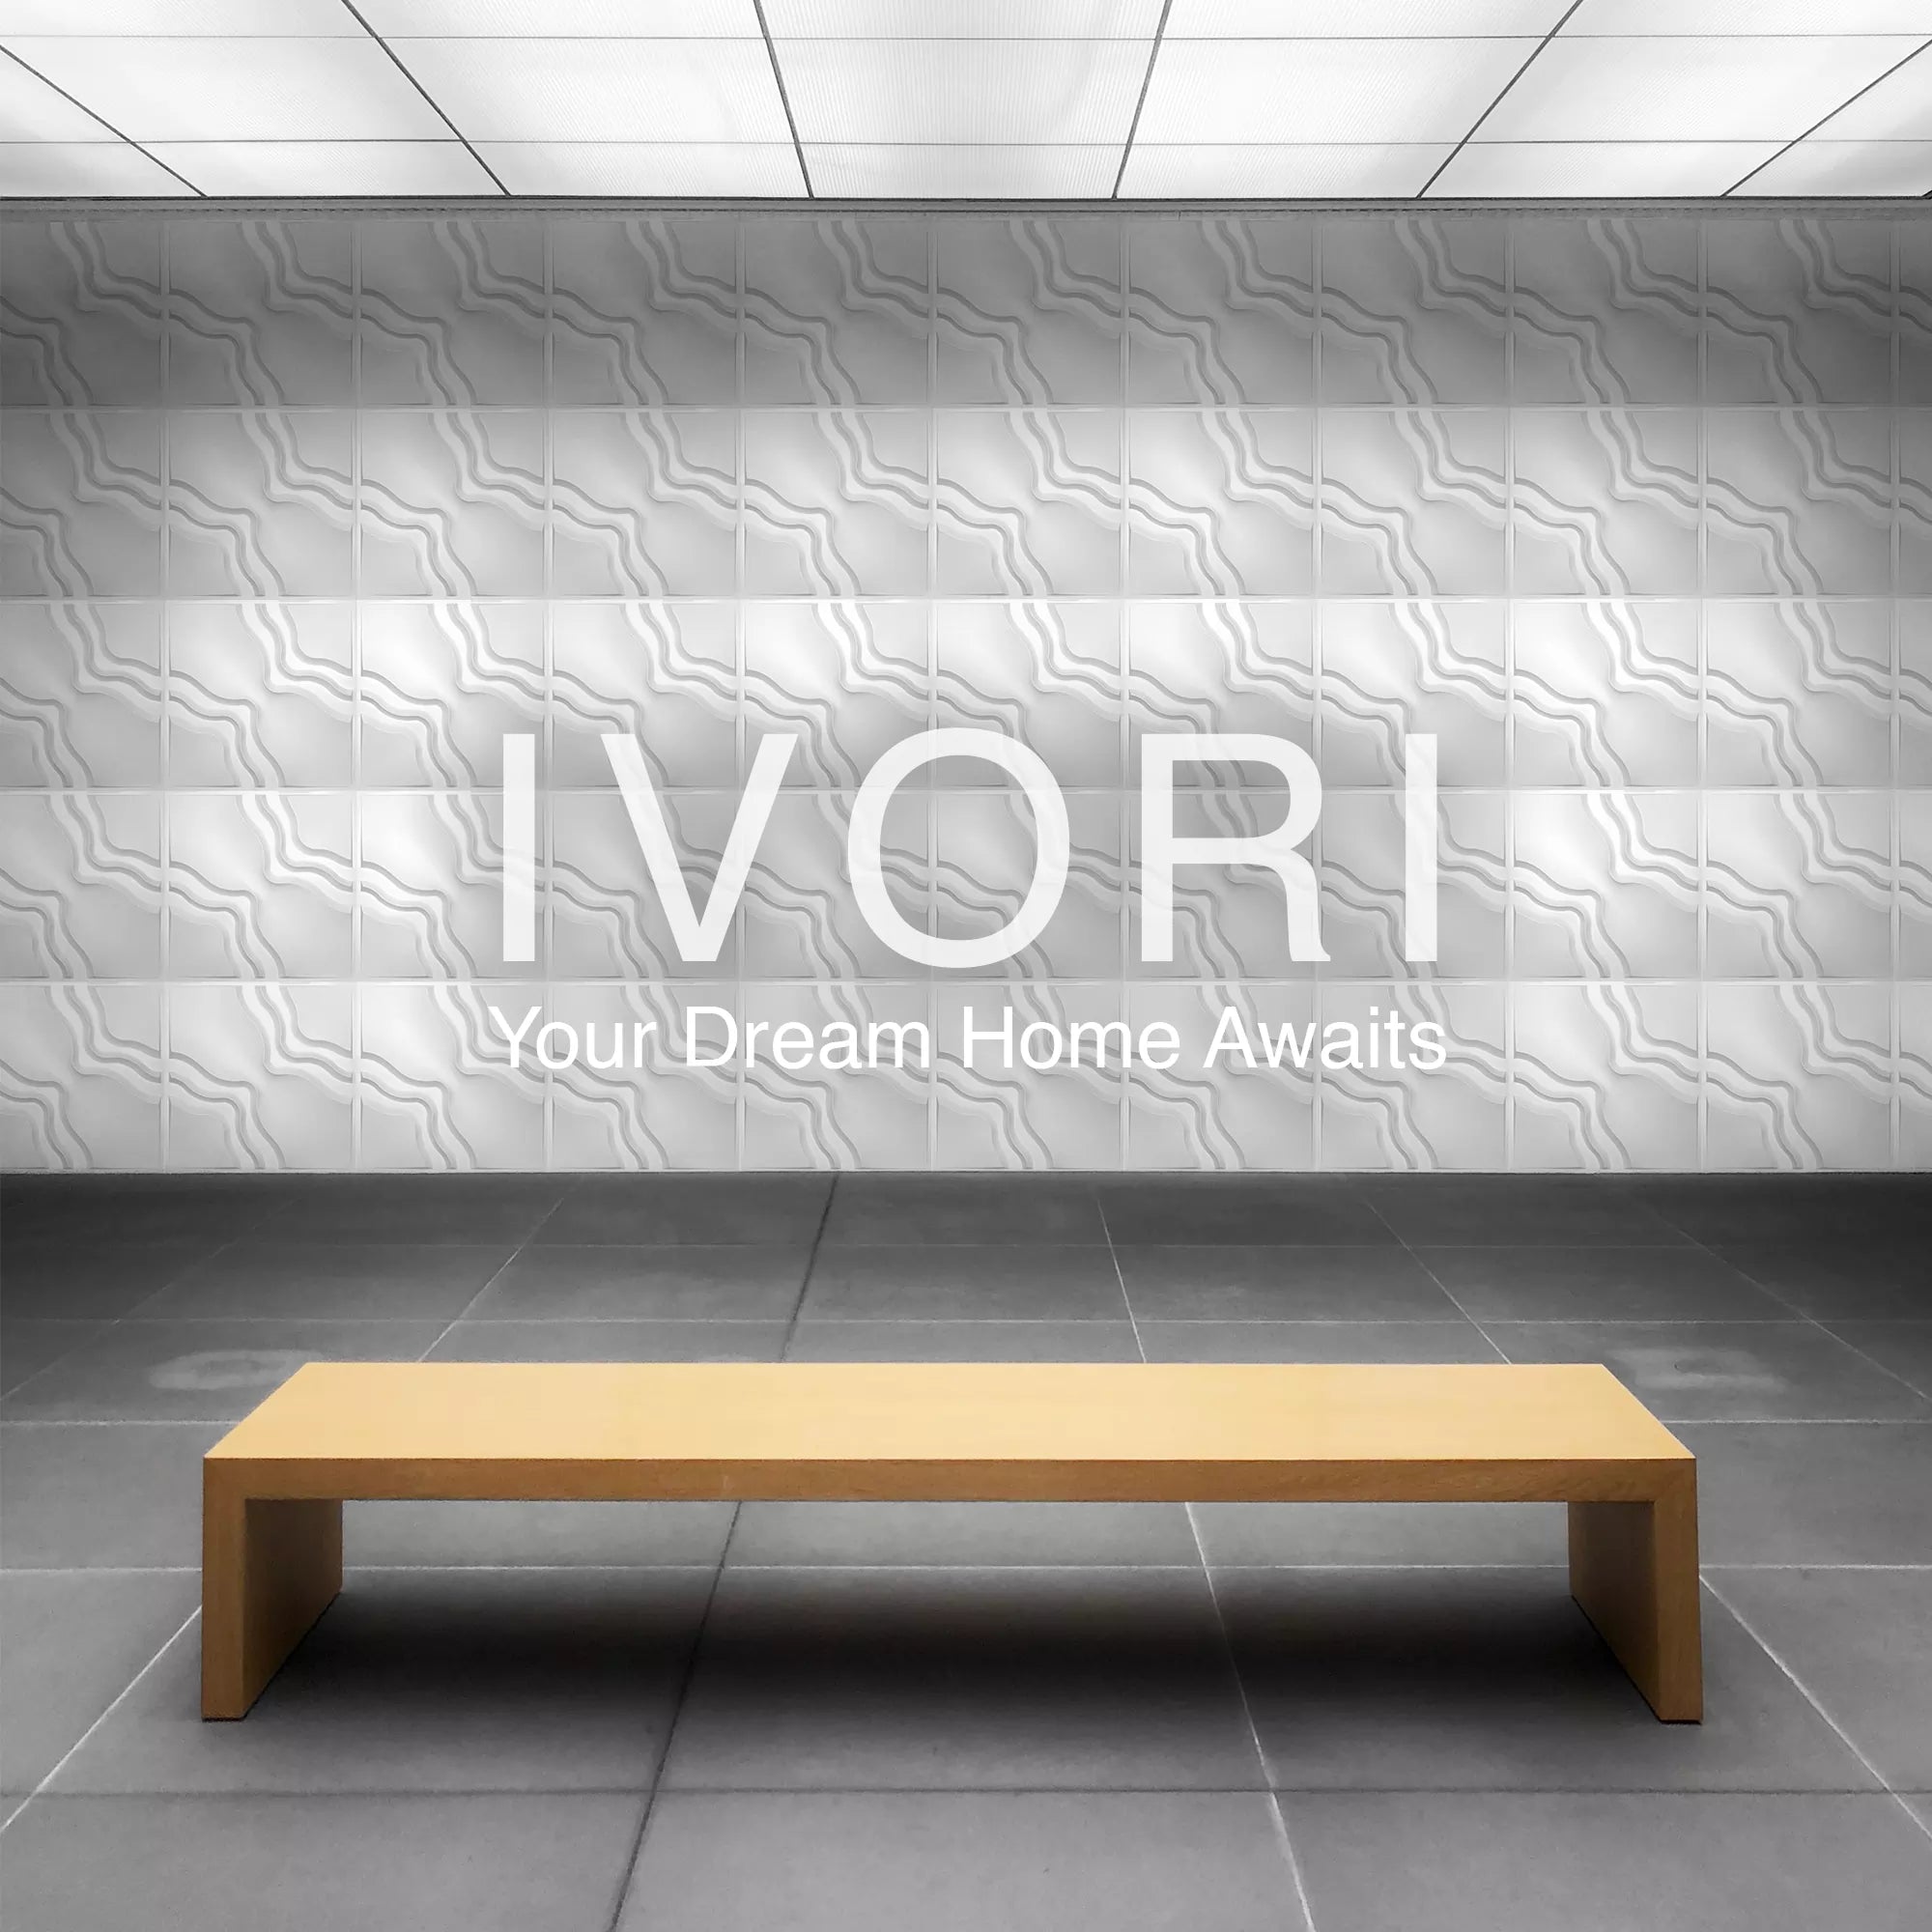 IVORI™ Zags Lux Wall Panel  (12 pc set)